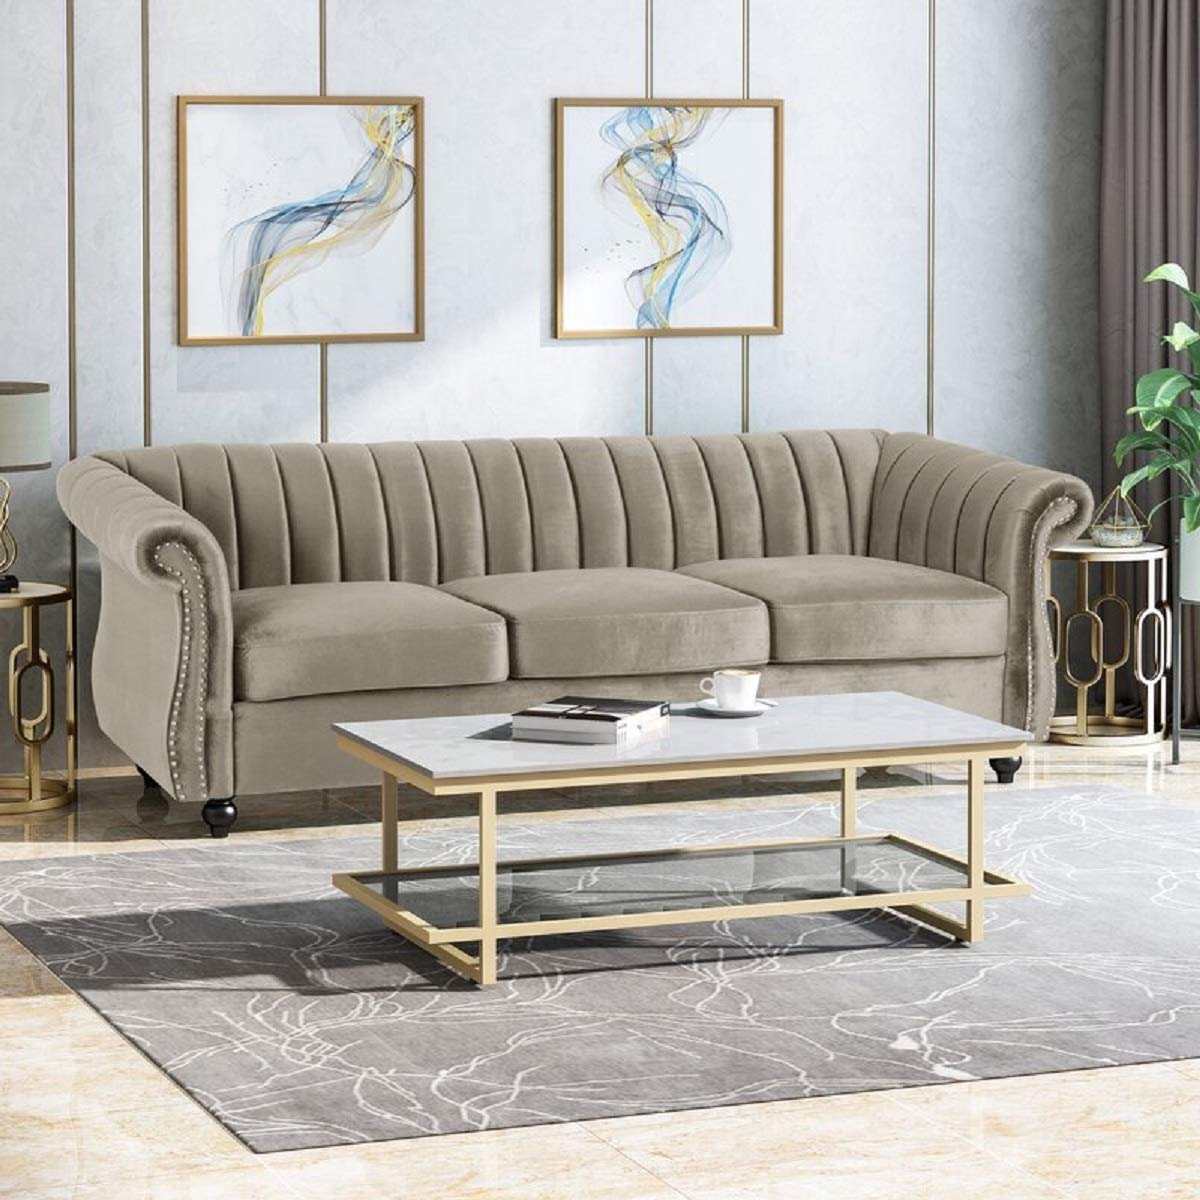 Designer Sofa Set:- 3 Seater Velvet Fabric Luxury Furniture Sofa Set (Olive Light Grey)